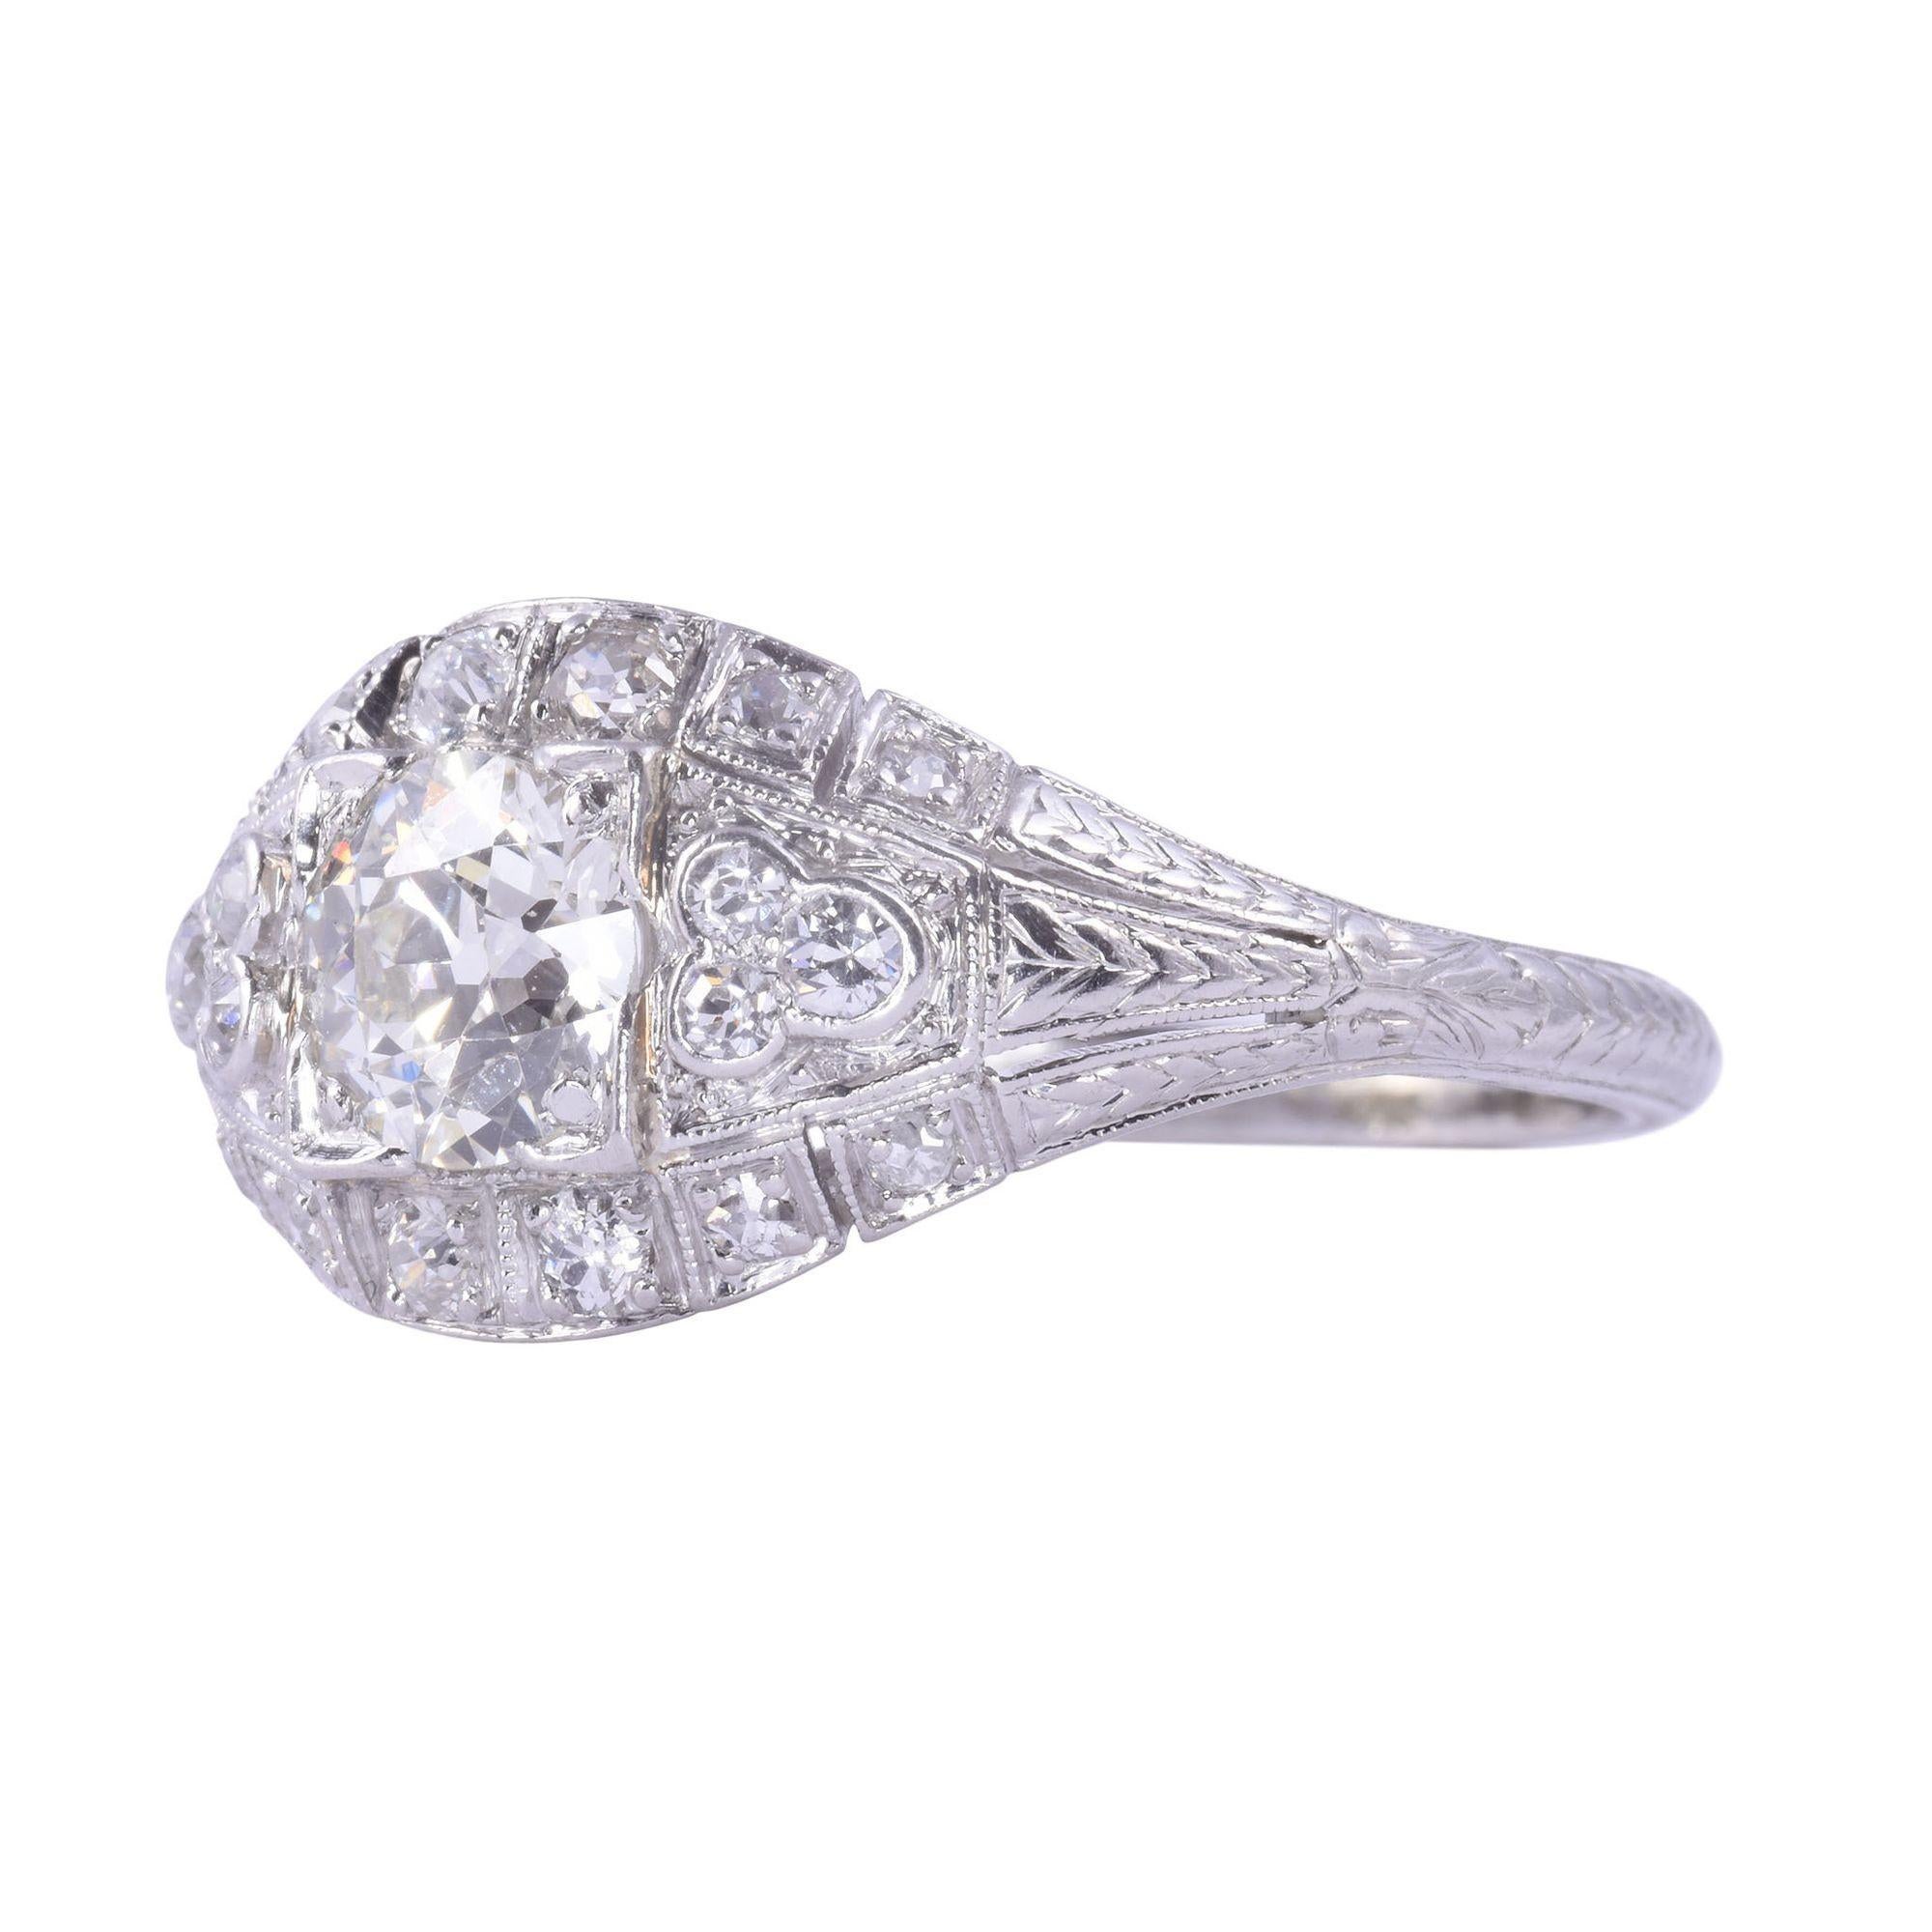 Antique Petri Art Deco platinum diamond engagement ring, circa 1920. This Art Deco engagement ring marked Petri is crafted in platinum. The platinum ring features an illusion set .80 carat old European cut diamond center with VS1 clarity and J